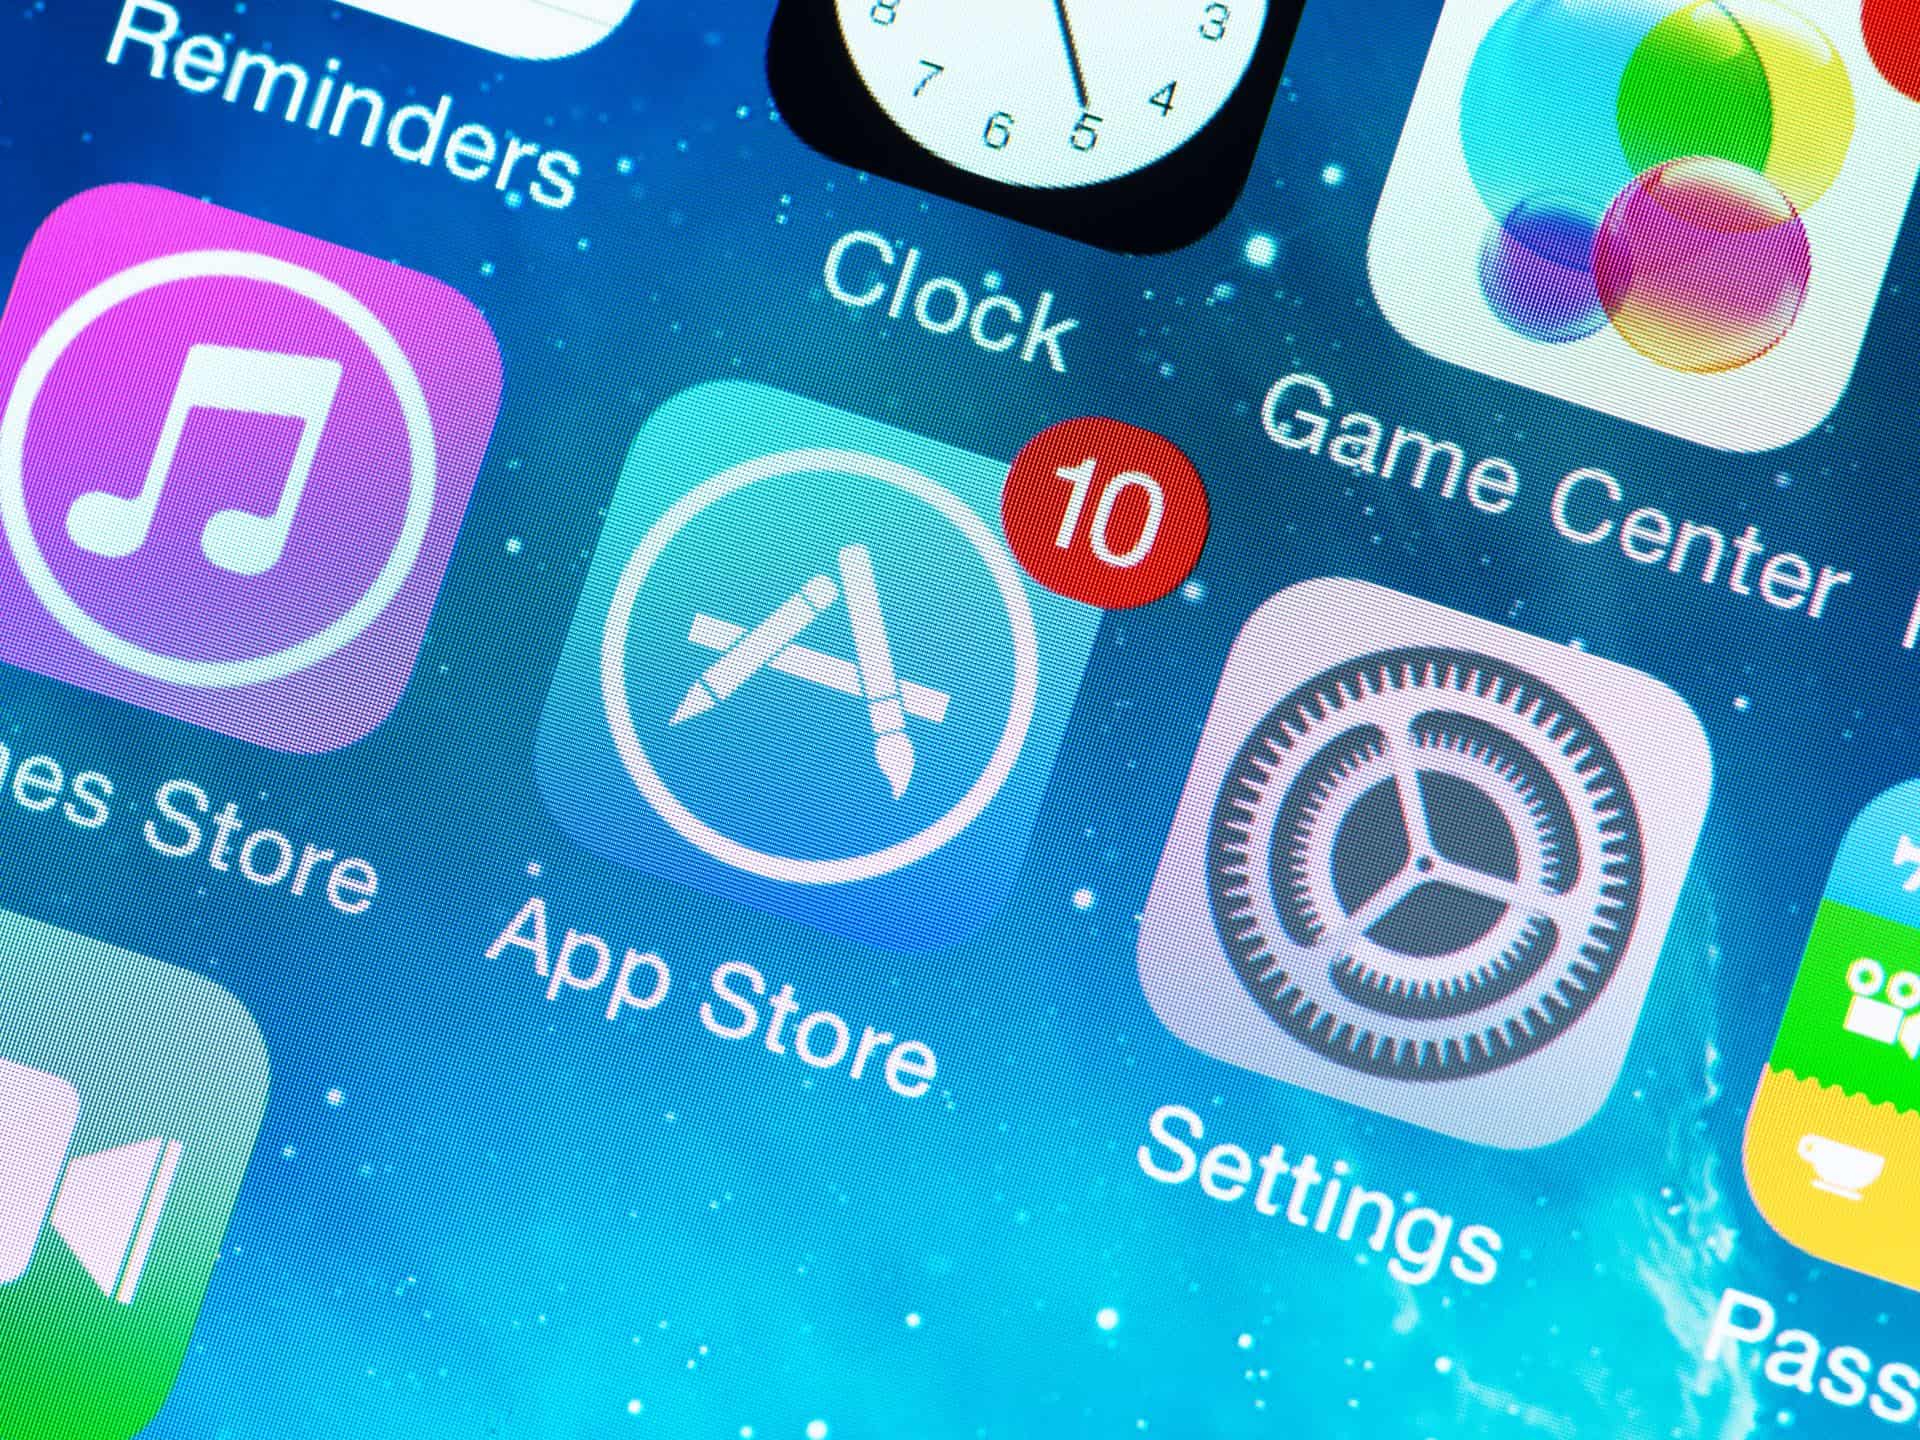 7 dicas para evitar instalar apps falsos no iPhone ou iPad - Olhar